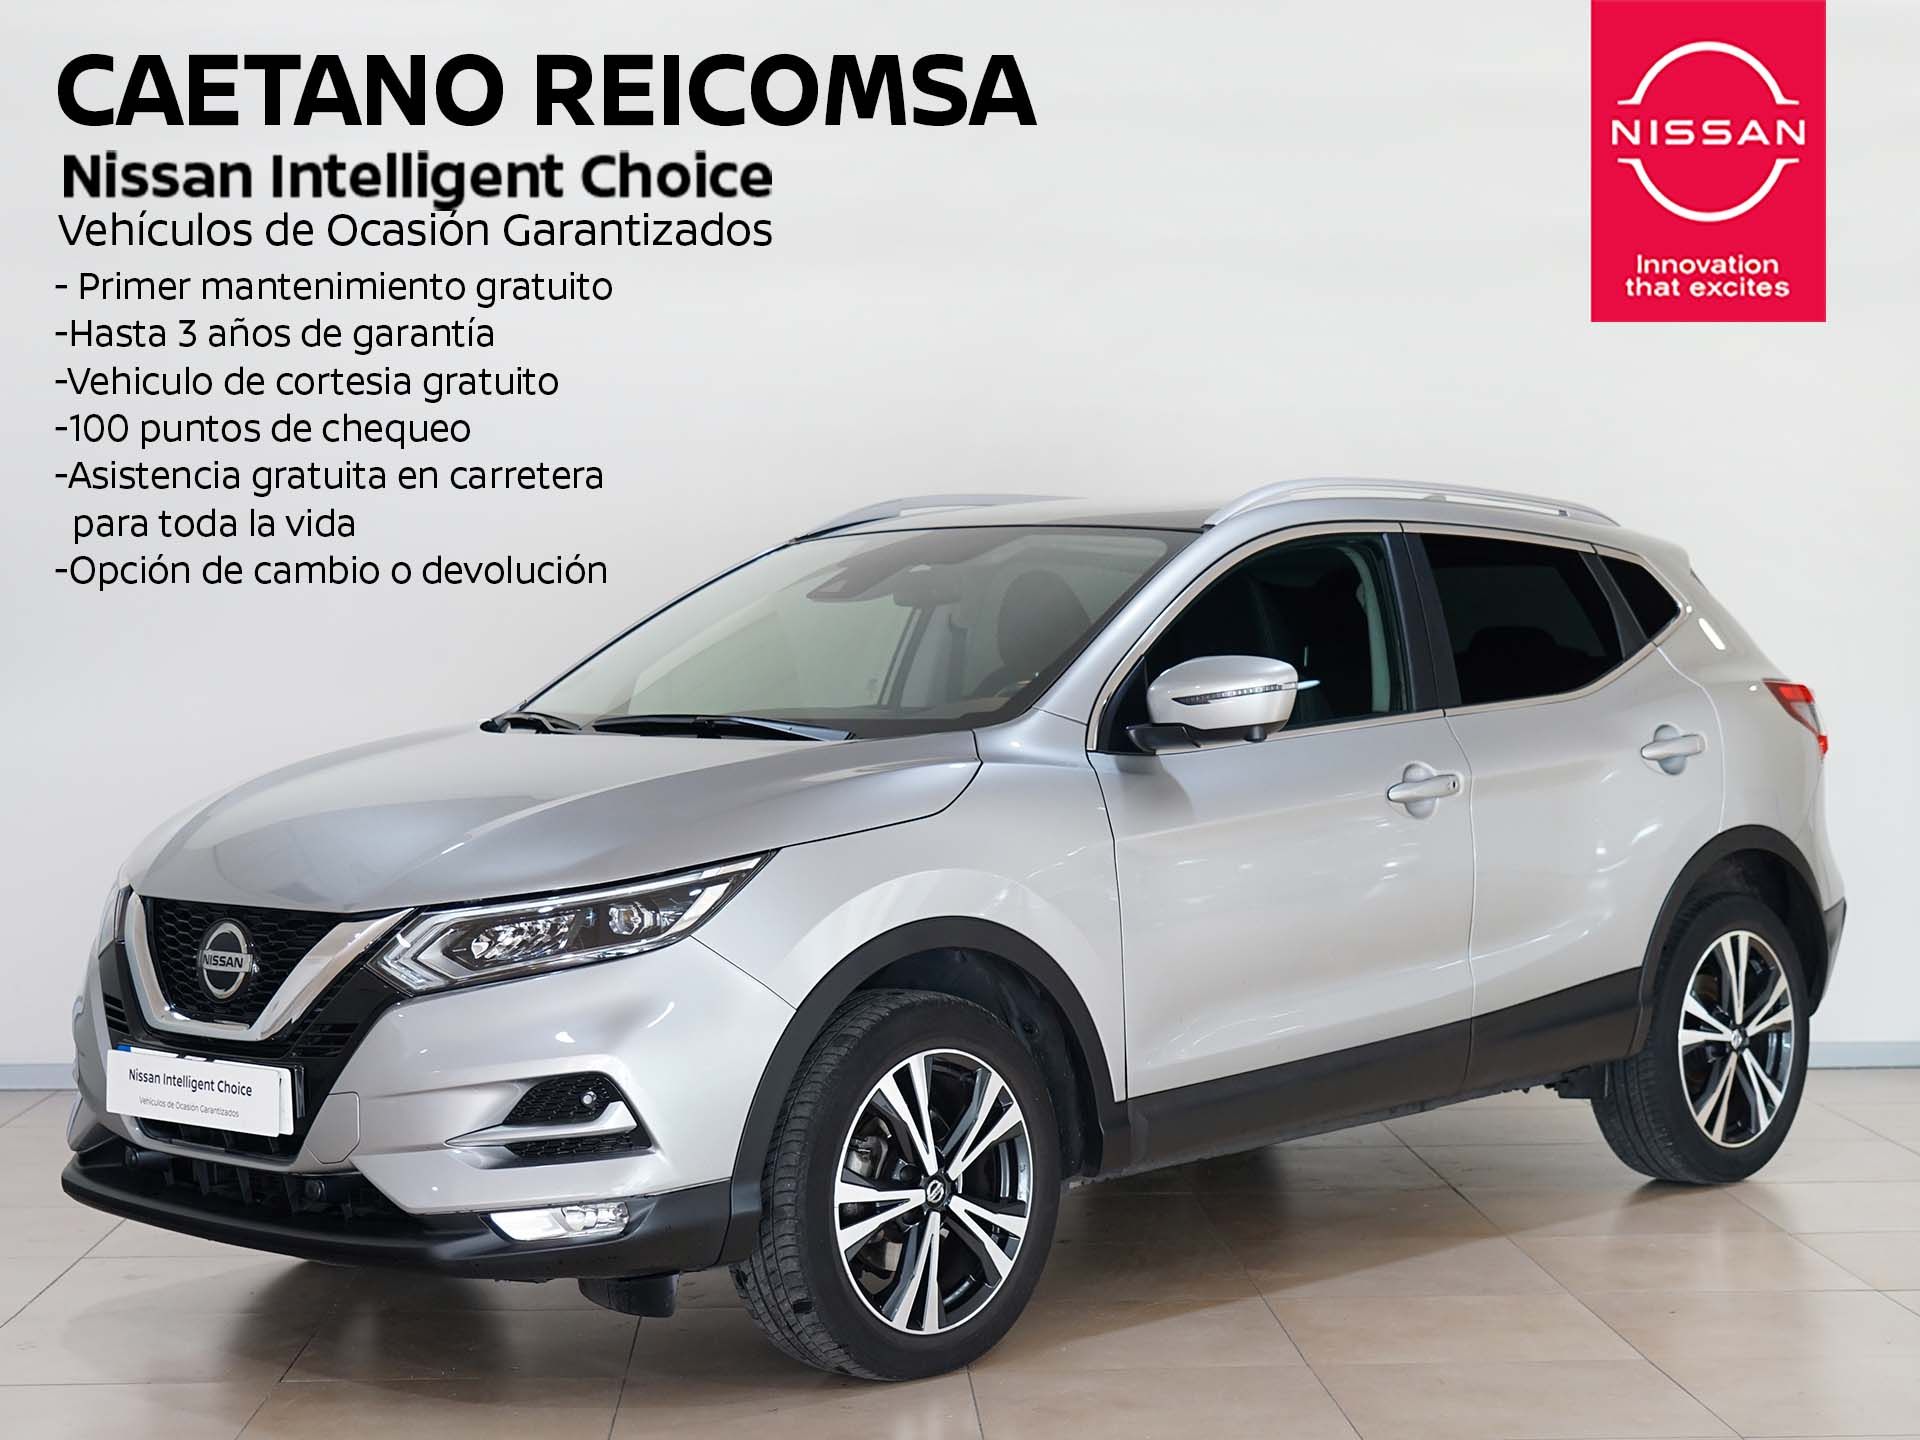 Telégrafo He reconocido Congelar Nissan Qashqai DIG-T 103 kW (140 CV) E6D N-CONNECTA 2019 59306 kms Plata  Diamante (metalizado) segunda mano Madrid (5953) | Caetano Cuzco